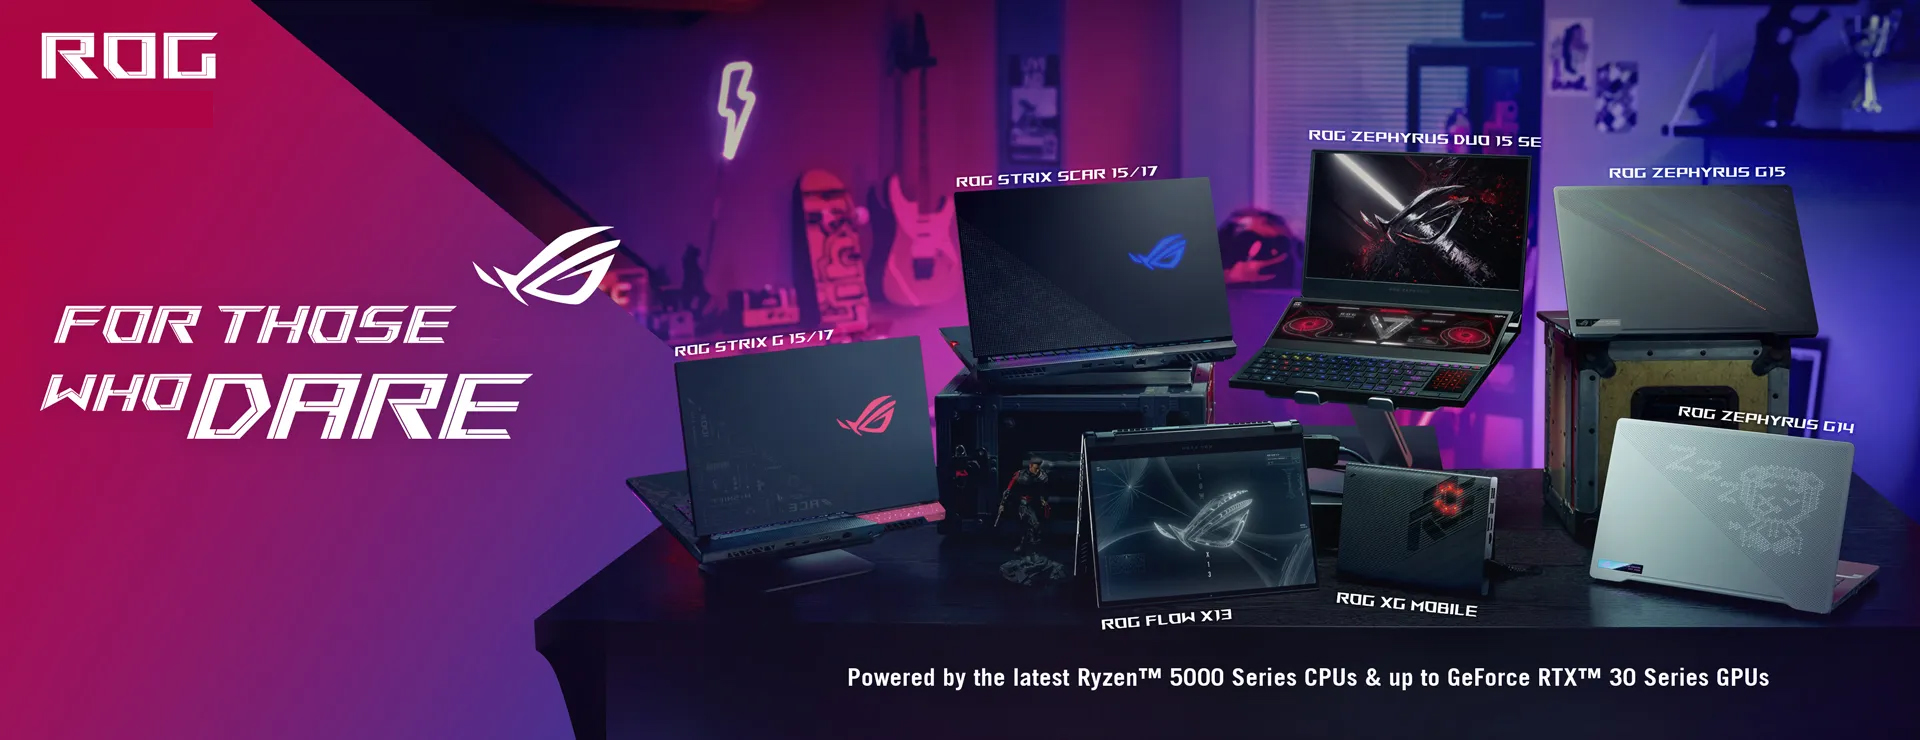 ASUS 2022 New ROG Strix Premium Gaming Laptop: 17.3 FHD 144Hz IPS Display,  AMD Gaming 8-Core Ryzen 9-5900HX, 64GB RAM, 4TB SSD, 4GB GeForce RTX